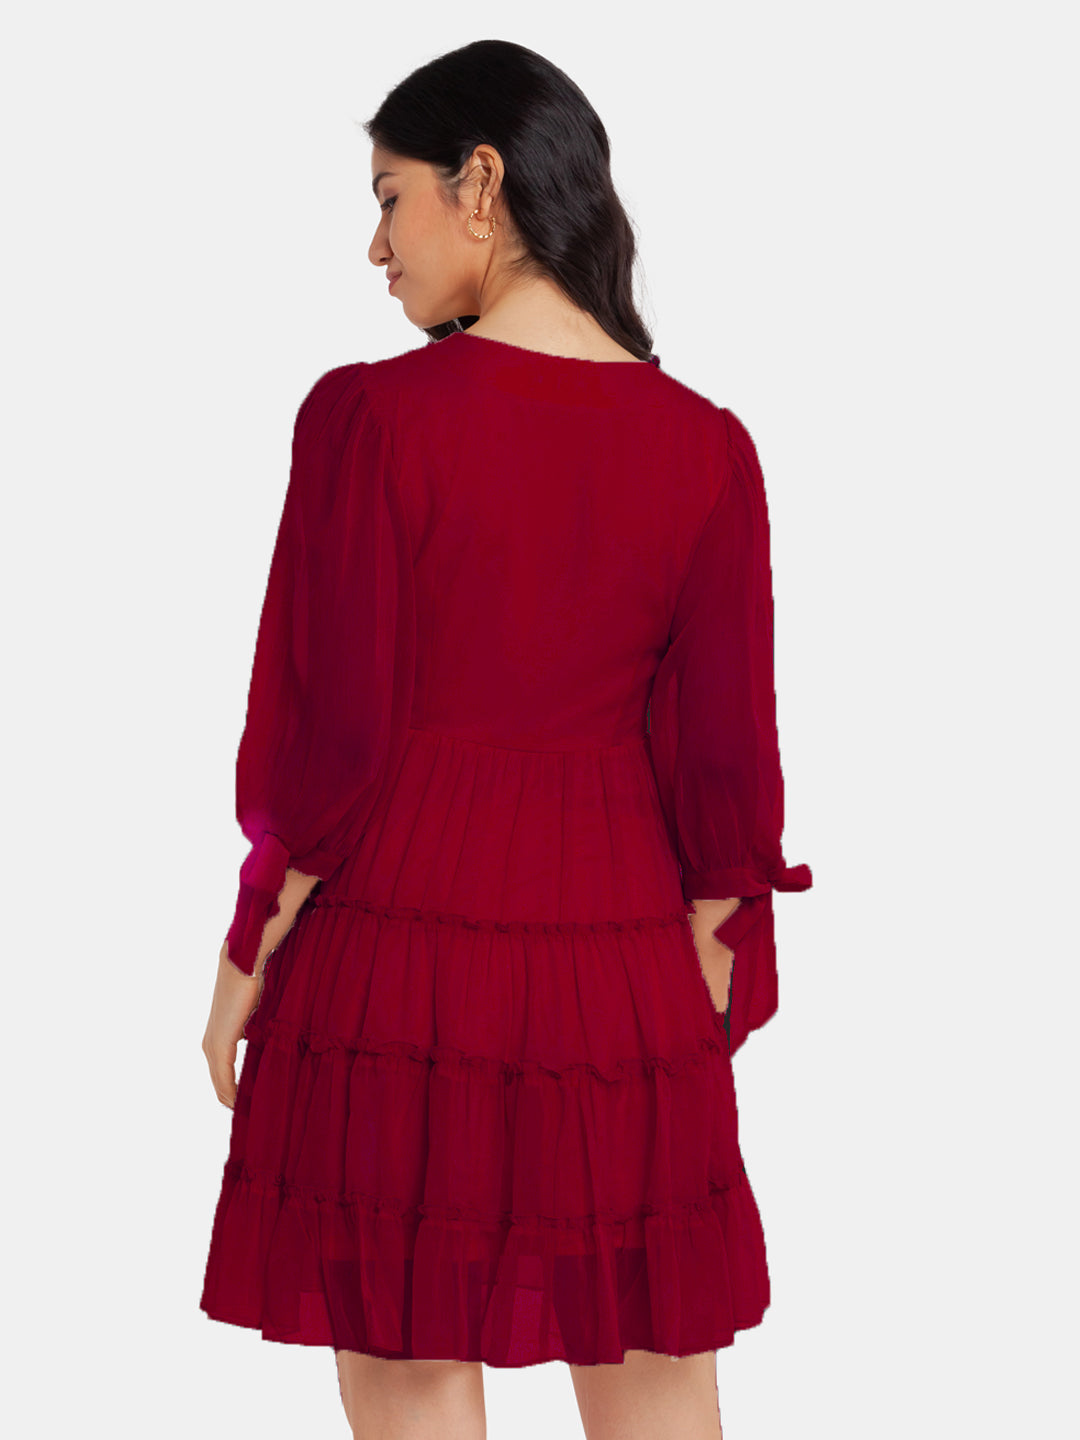 Crimson-Red-Solid-Fit-and-Flare-Short-Dress-VD02165_227-CrimsonRed-4